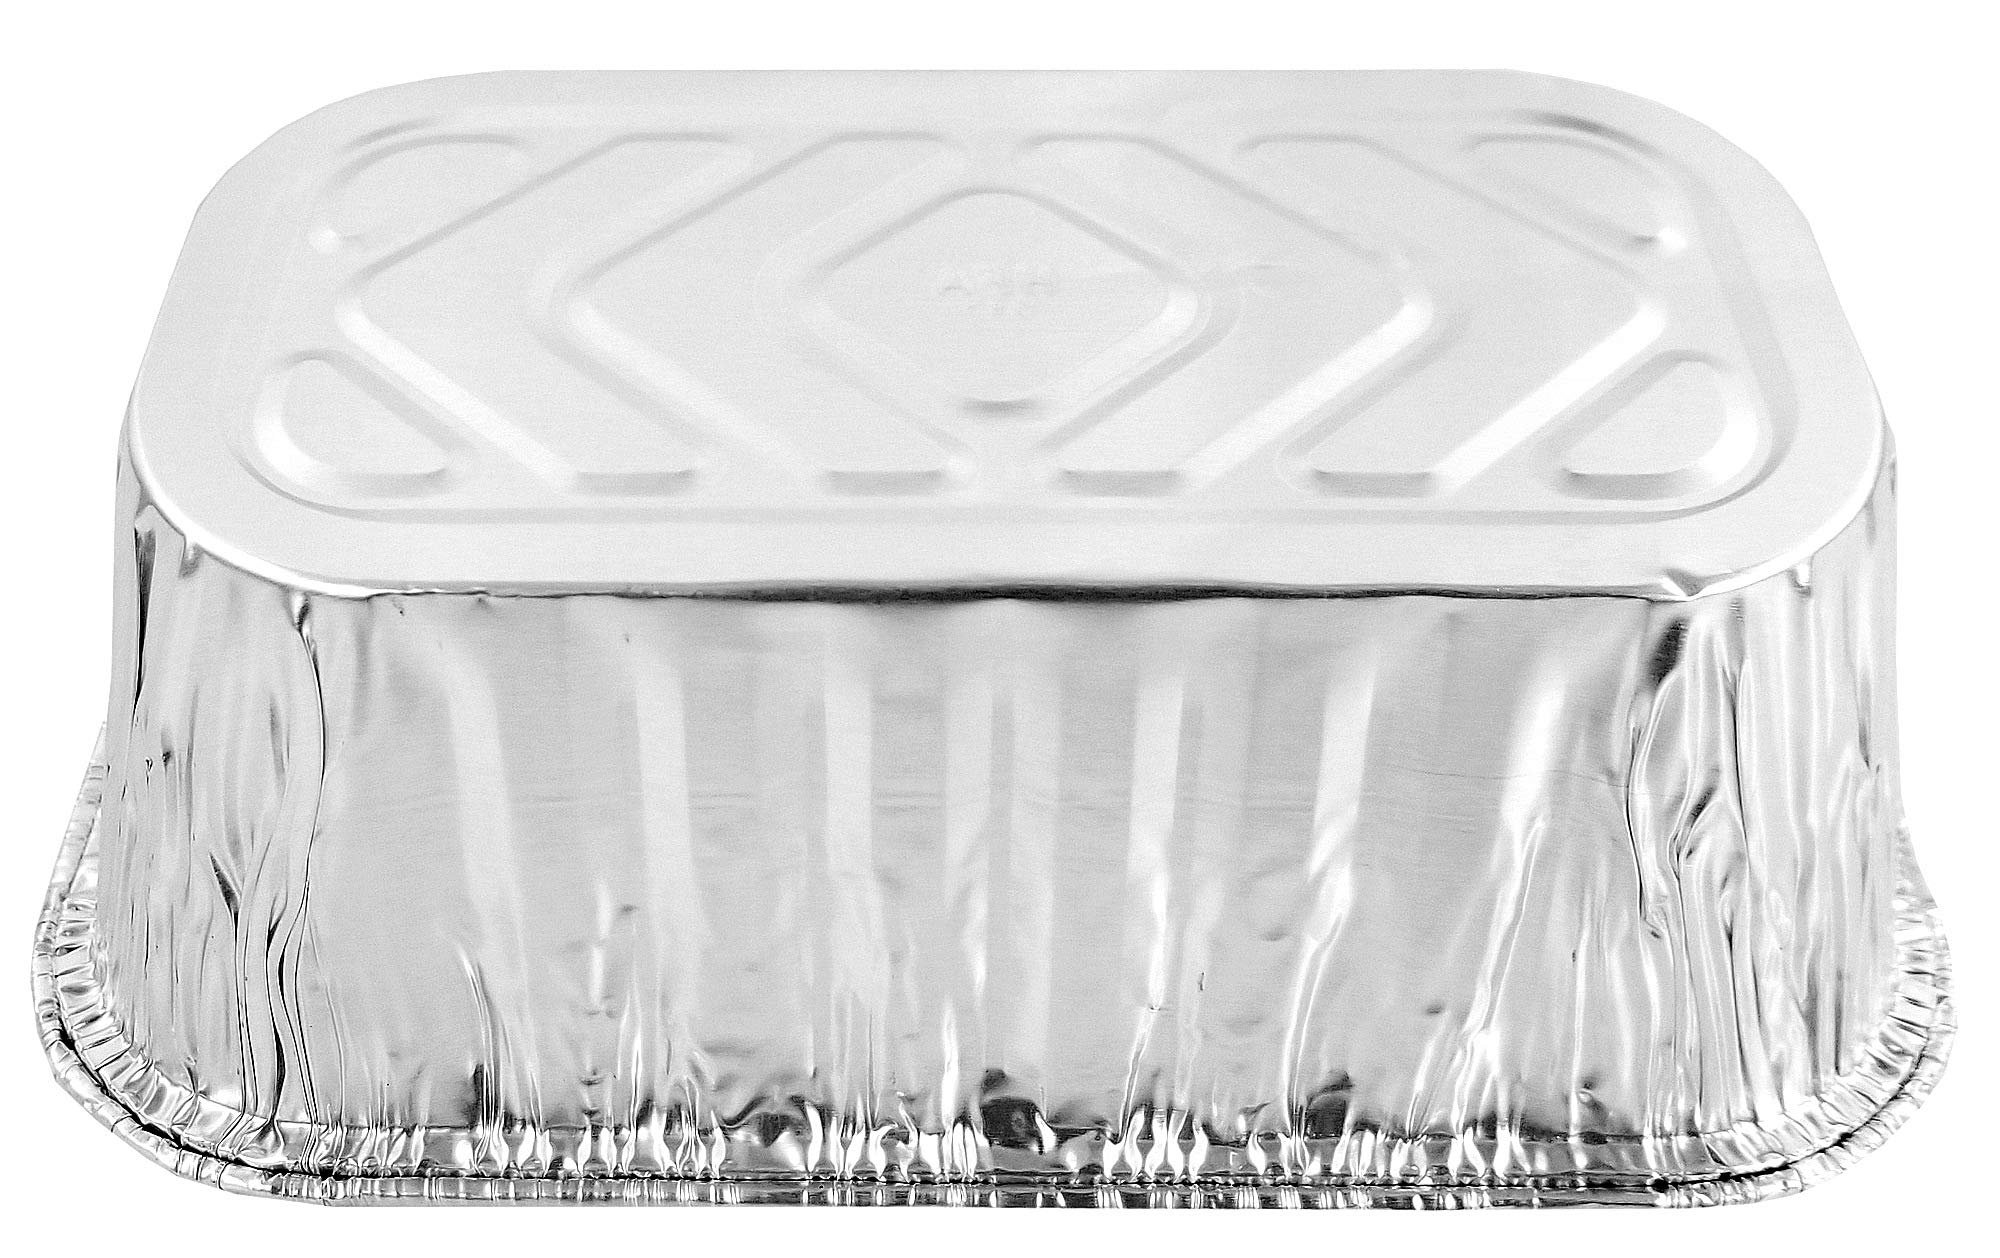 Pactogo Disposable 1 lb. Aluminum Foil Mini Loaf Pans with Clear Low Dome Lids (Pack of 40 Sets)